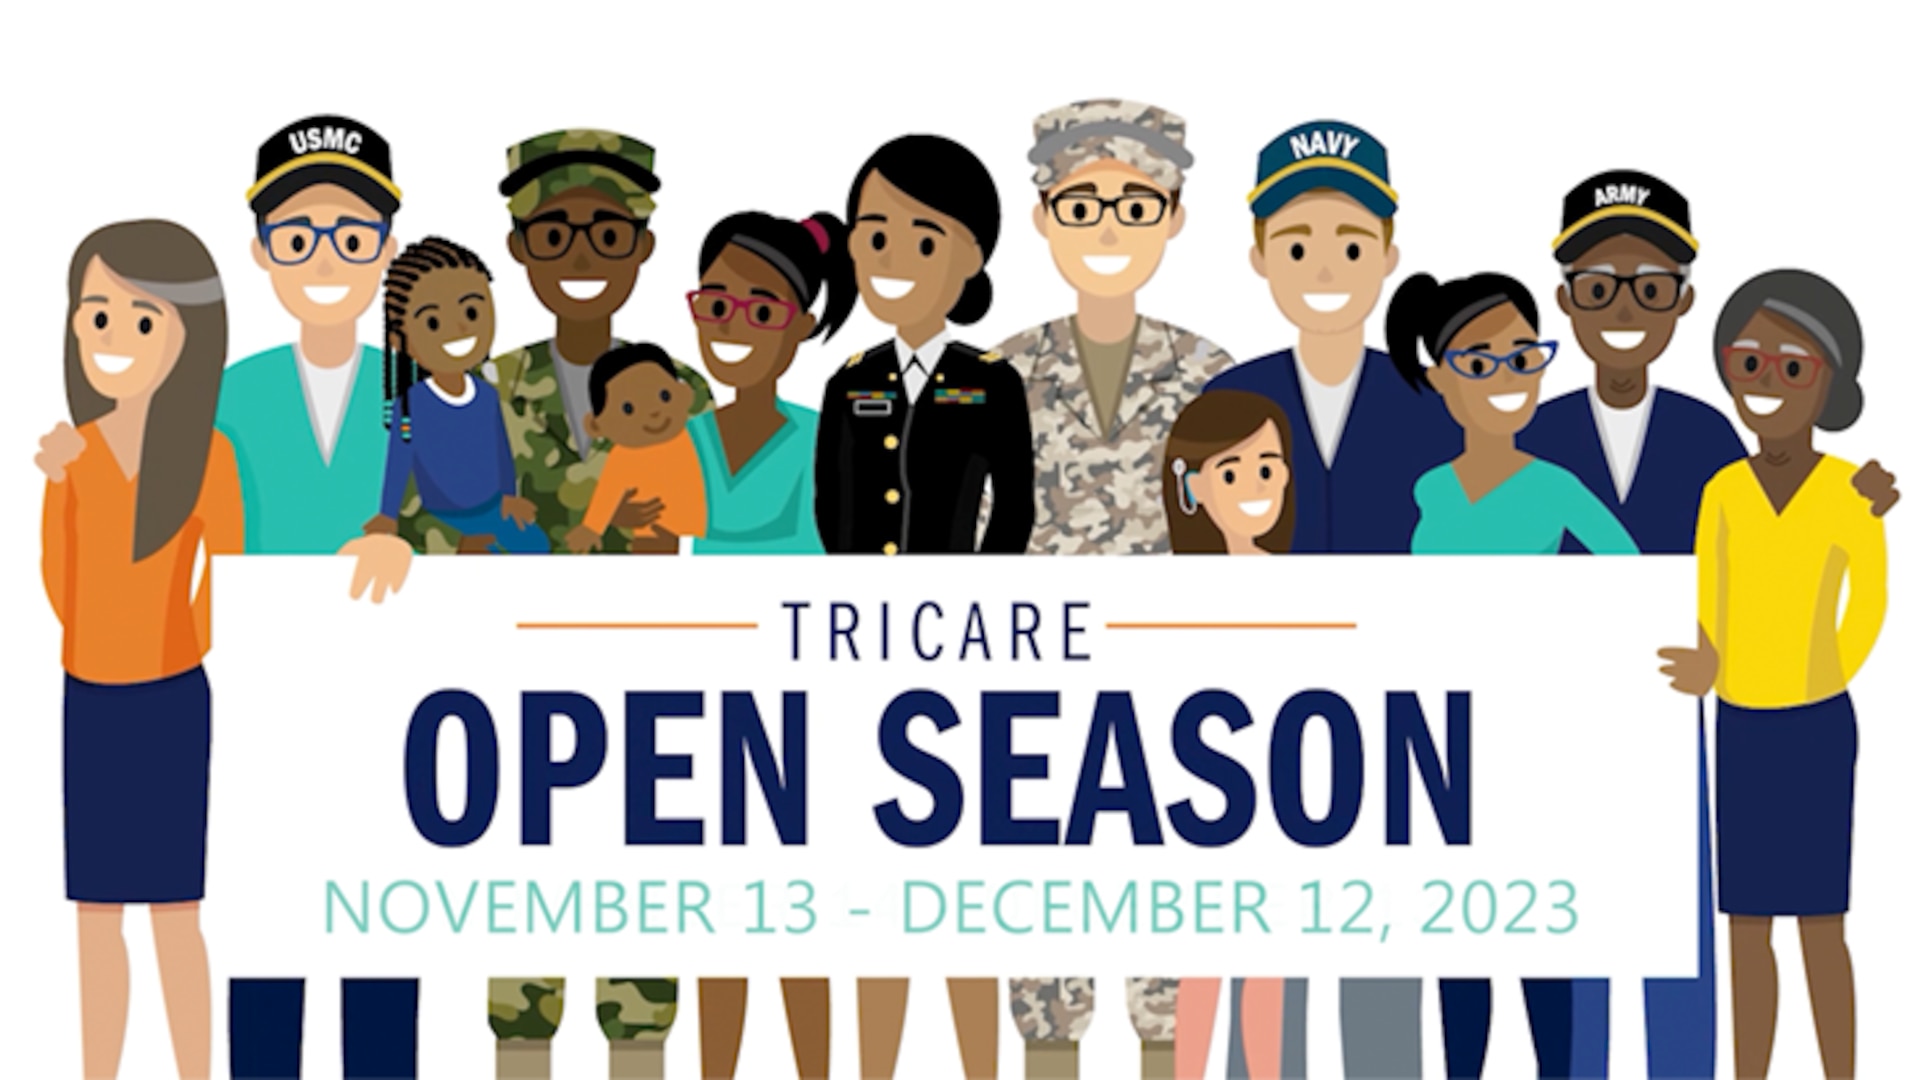 TRICARE Open Season 2023, November 13-December 12, 2023